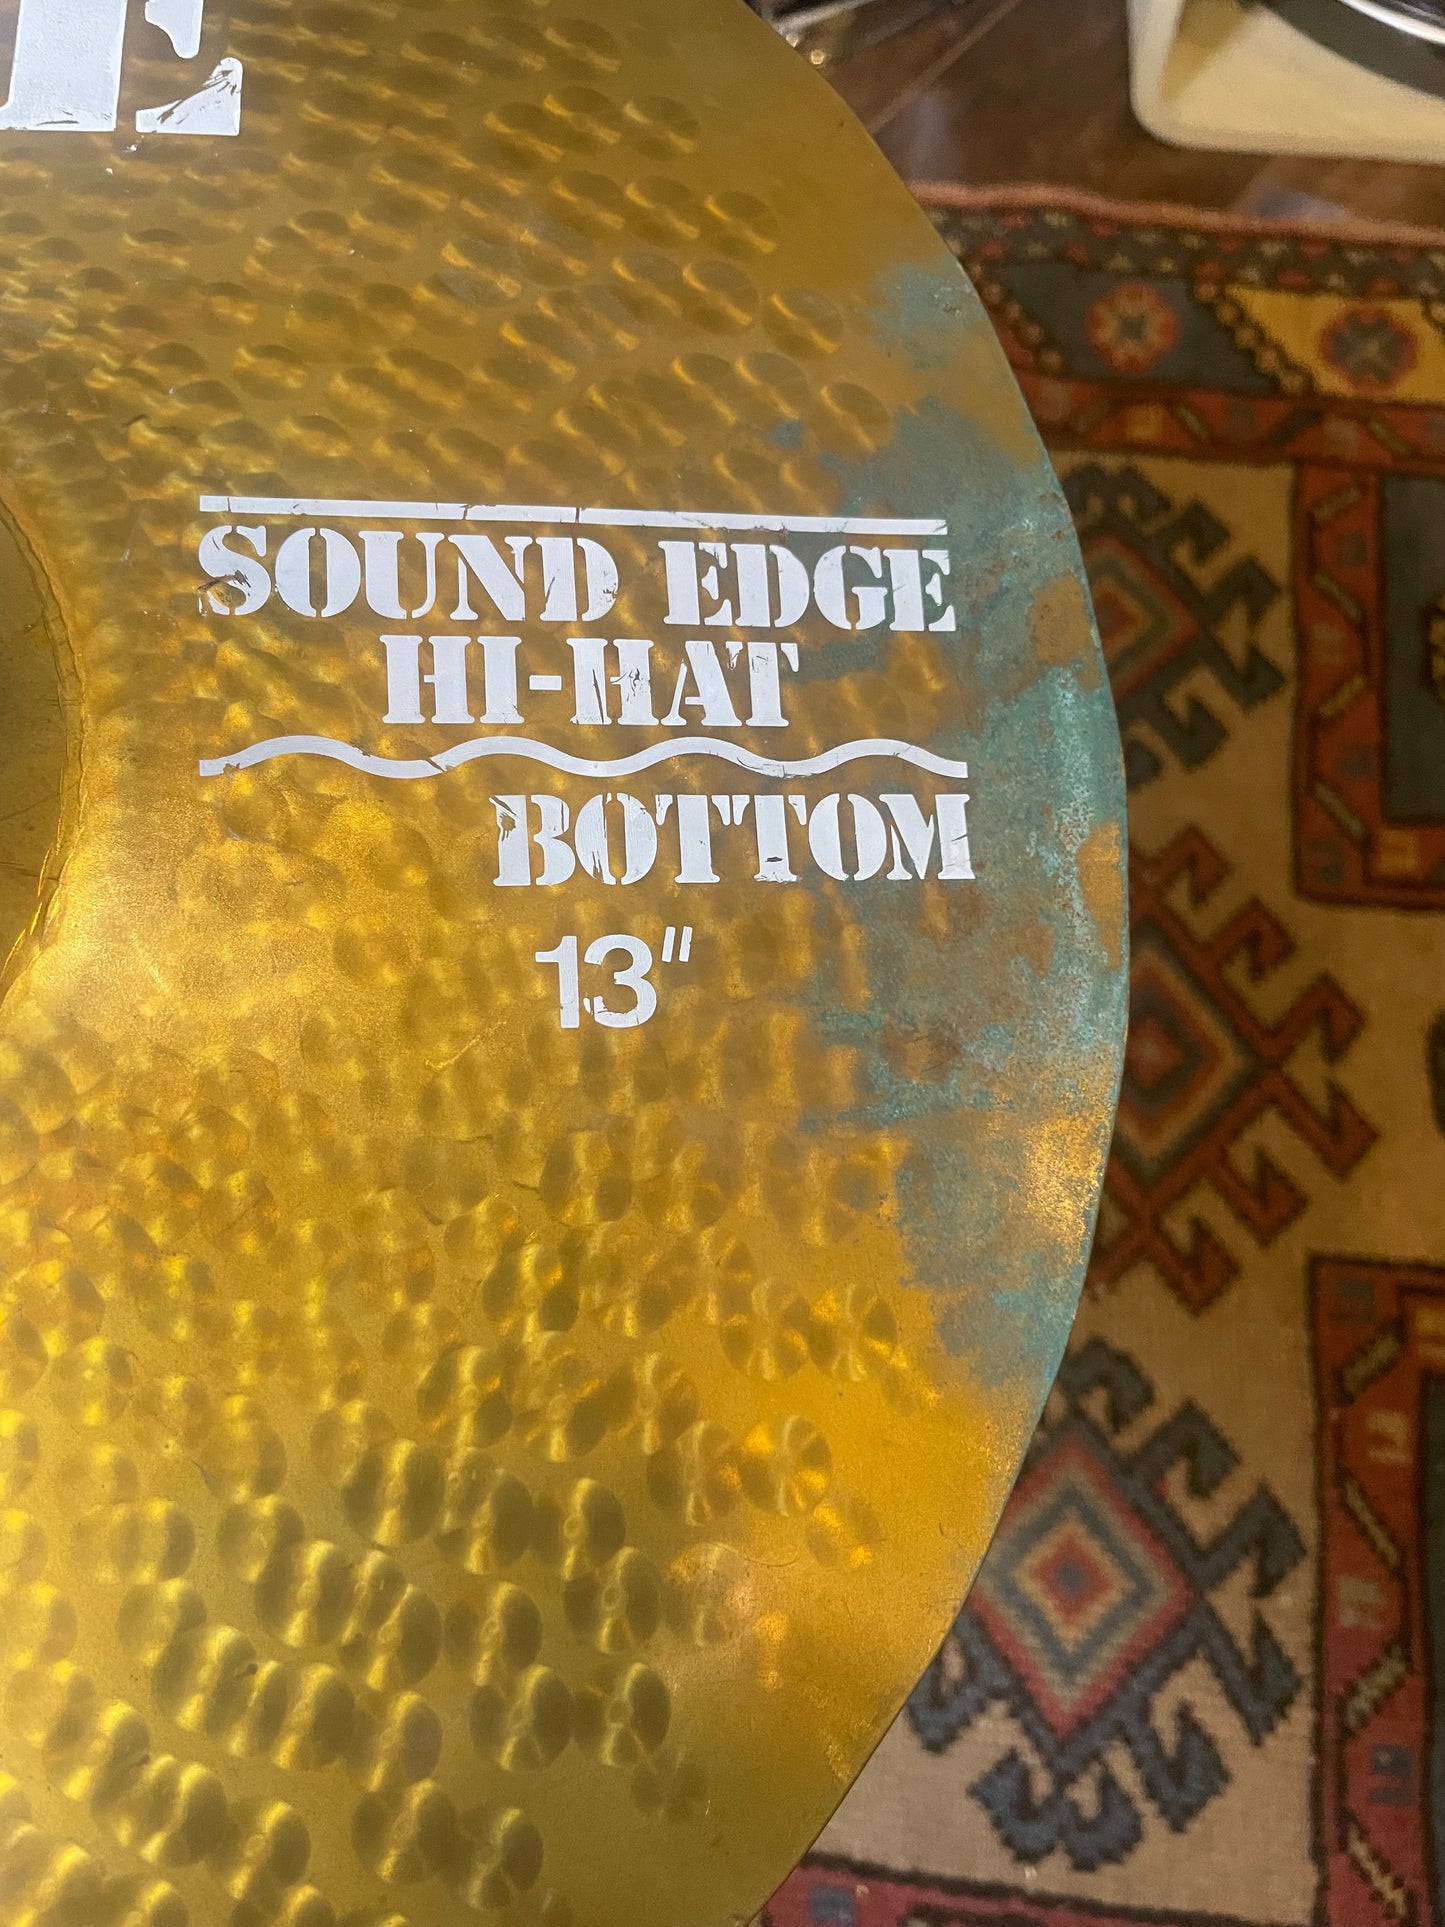 13" Paiste Rude Sound Edge Bottom Hi-Hat Cymbal 952g